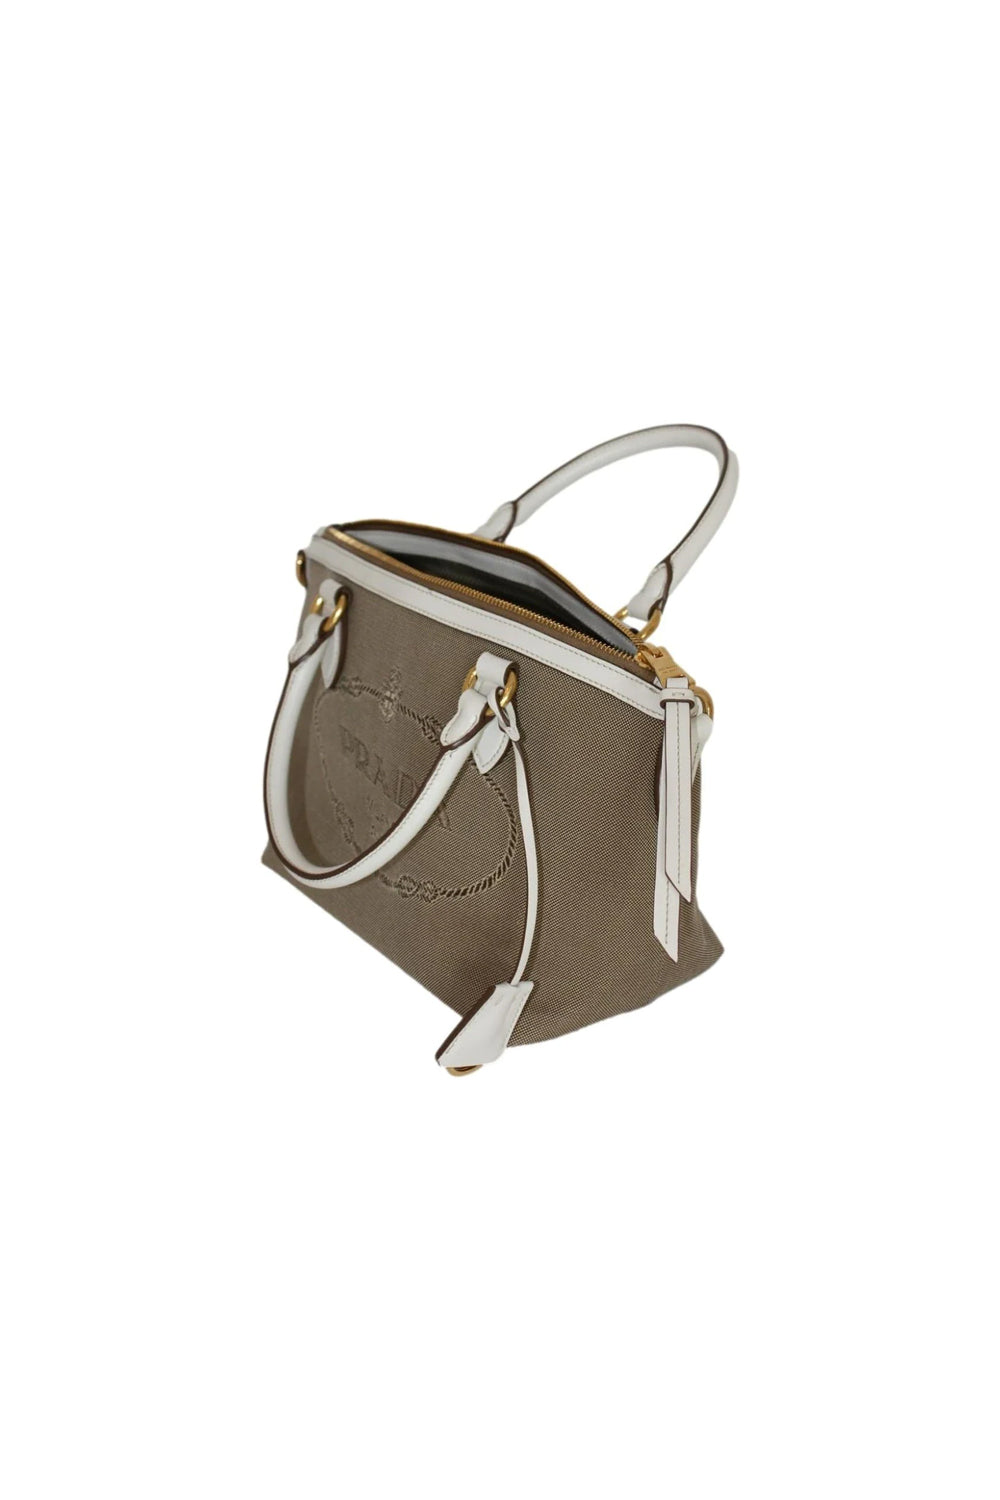 Prada Canvas Jacquard Logo Leather Trim Satchel Bag